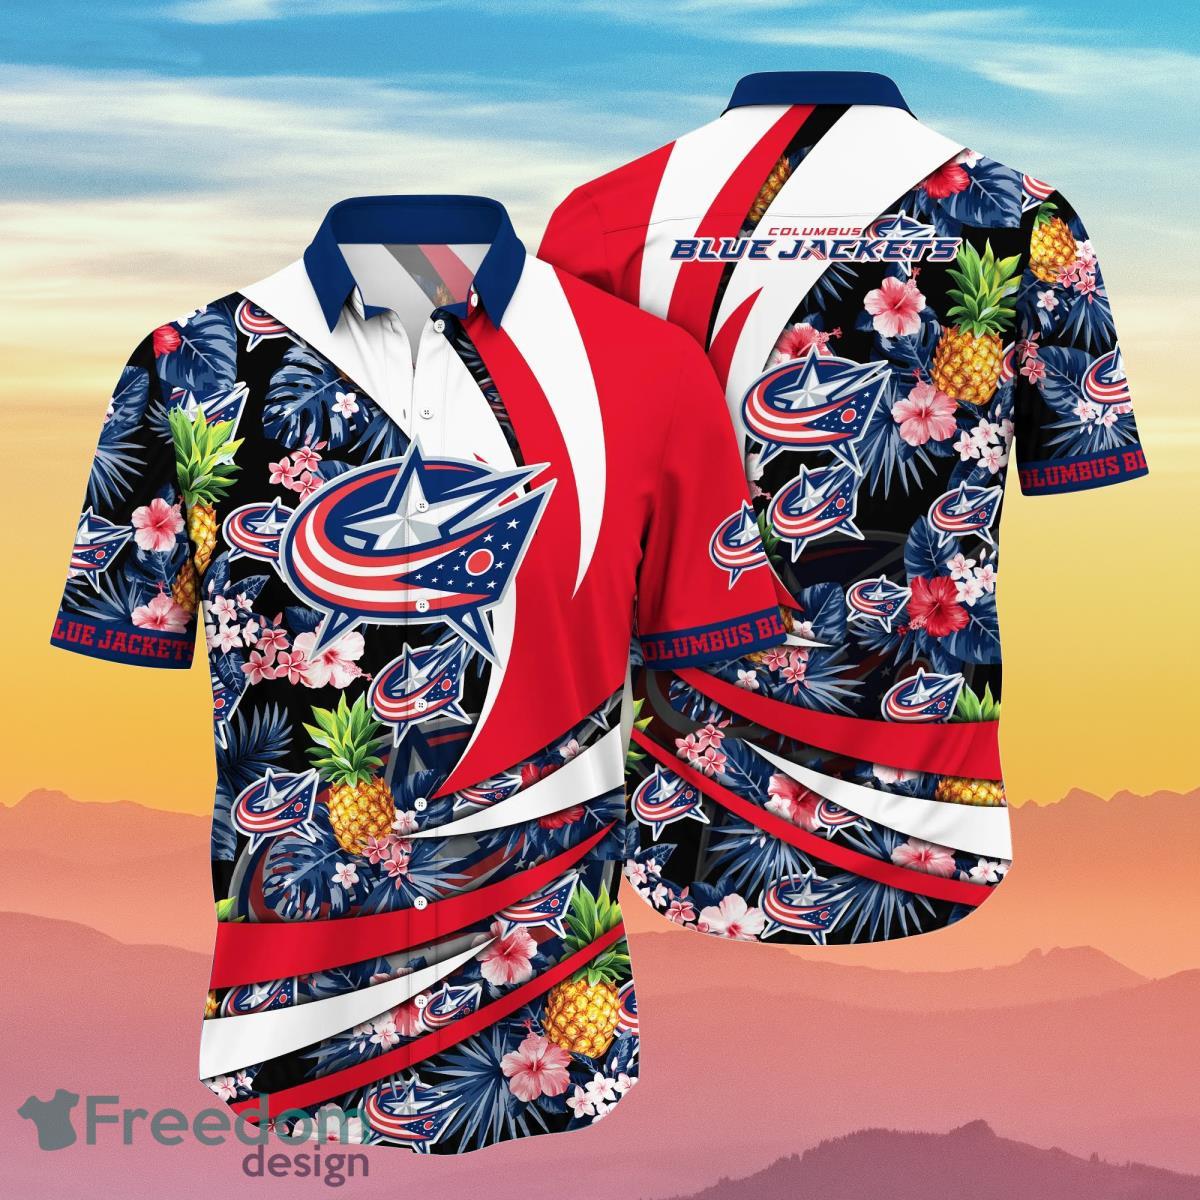 Floral NHL Columbus Blue Jackets Hawaiian Design Baseball Jersey For Men  And Women - Freedomdesign